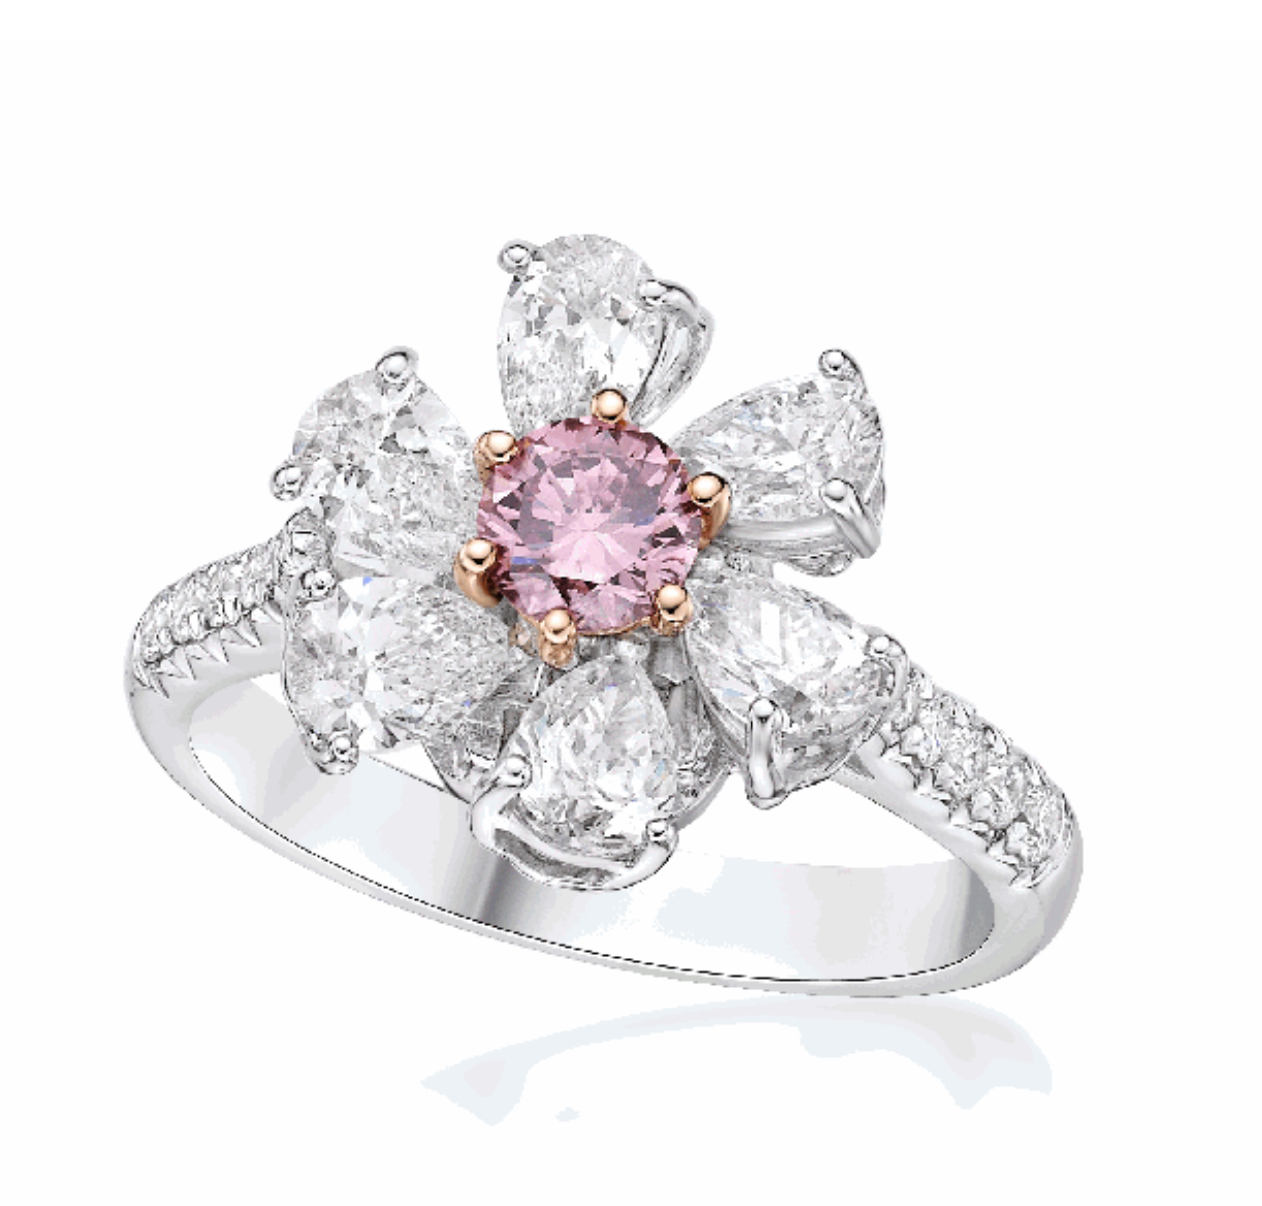 Buy Handmade Flower-shaped Diamond Engagement Ring and Eternity Band 14K  White Gold Online in India - Etsy